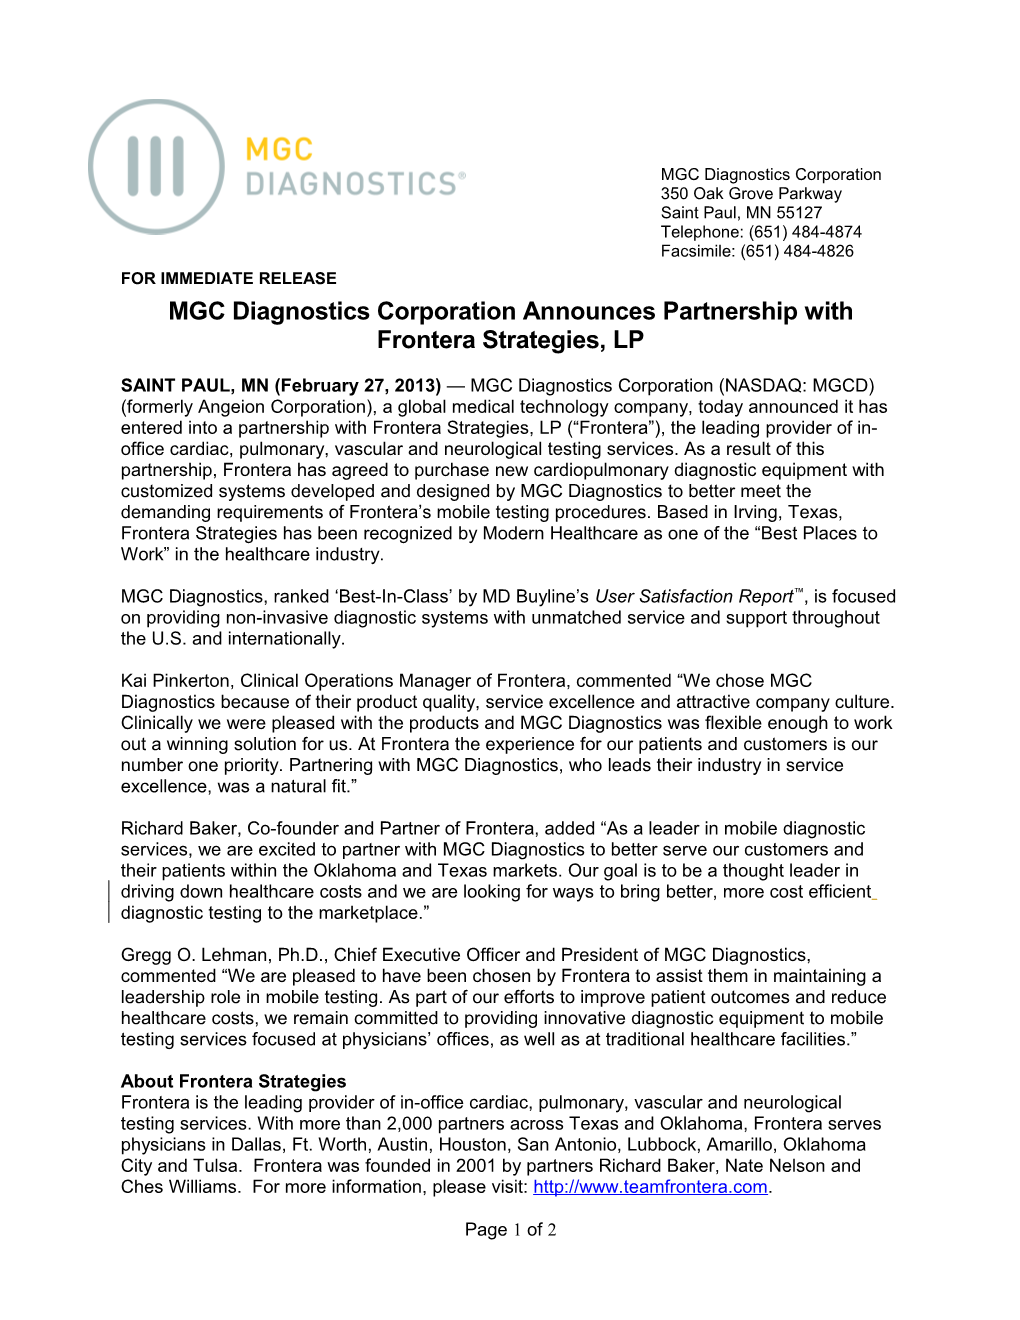 MGC Diagnostics Corporation Announces Partnership with Frontera Strategies, LP